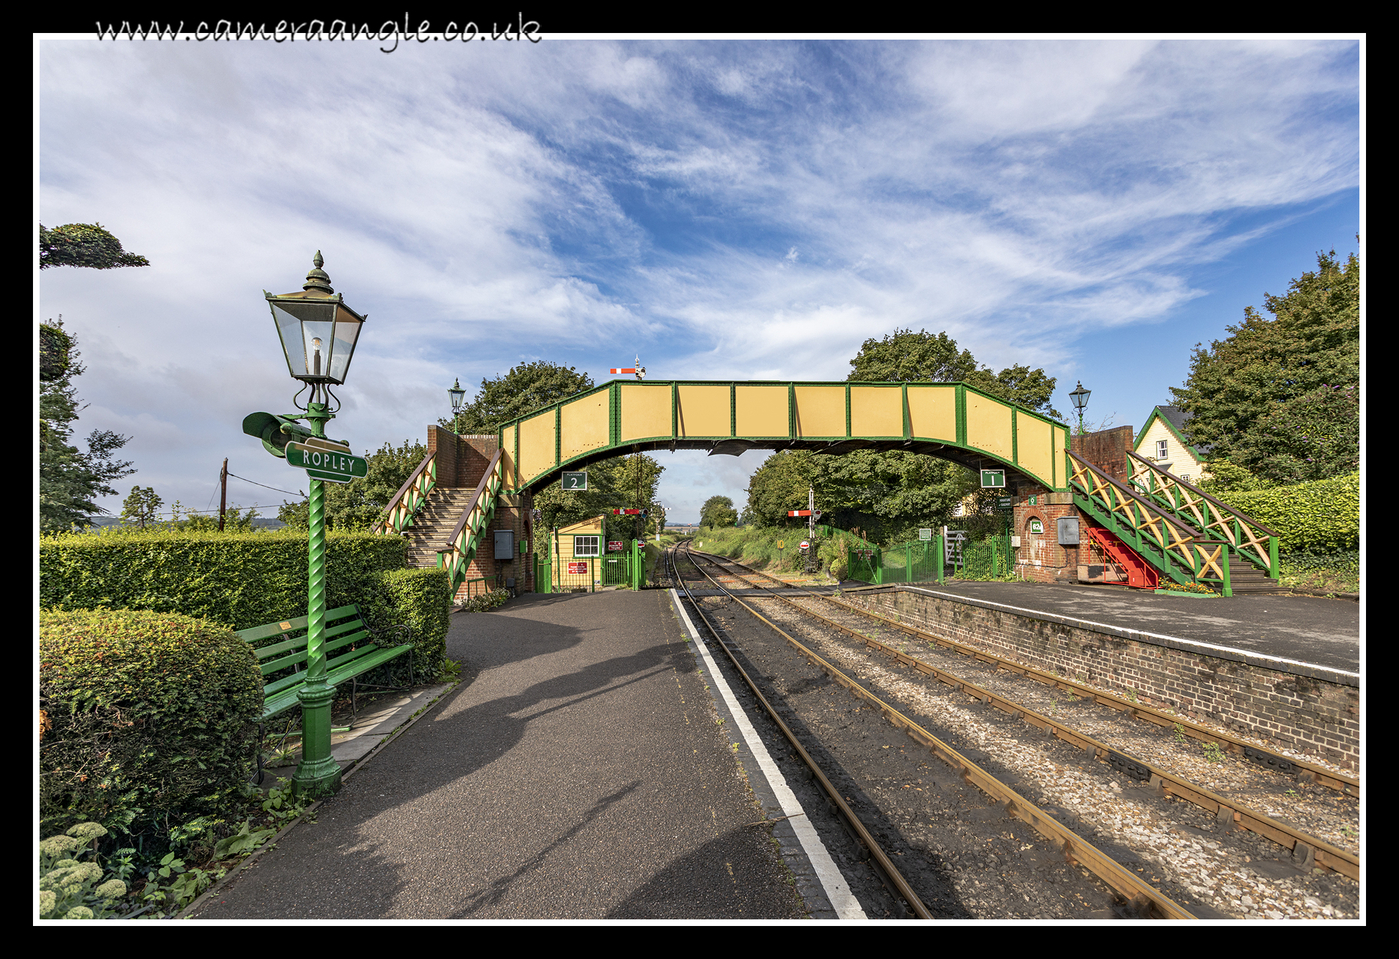 Ropley Station Bridge
Keywords: Ropley Station Bridge